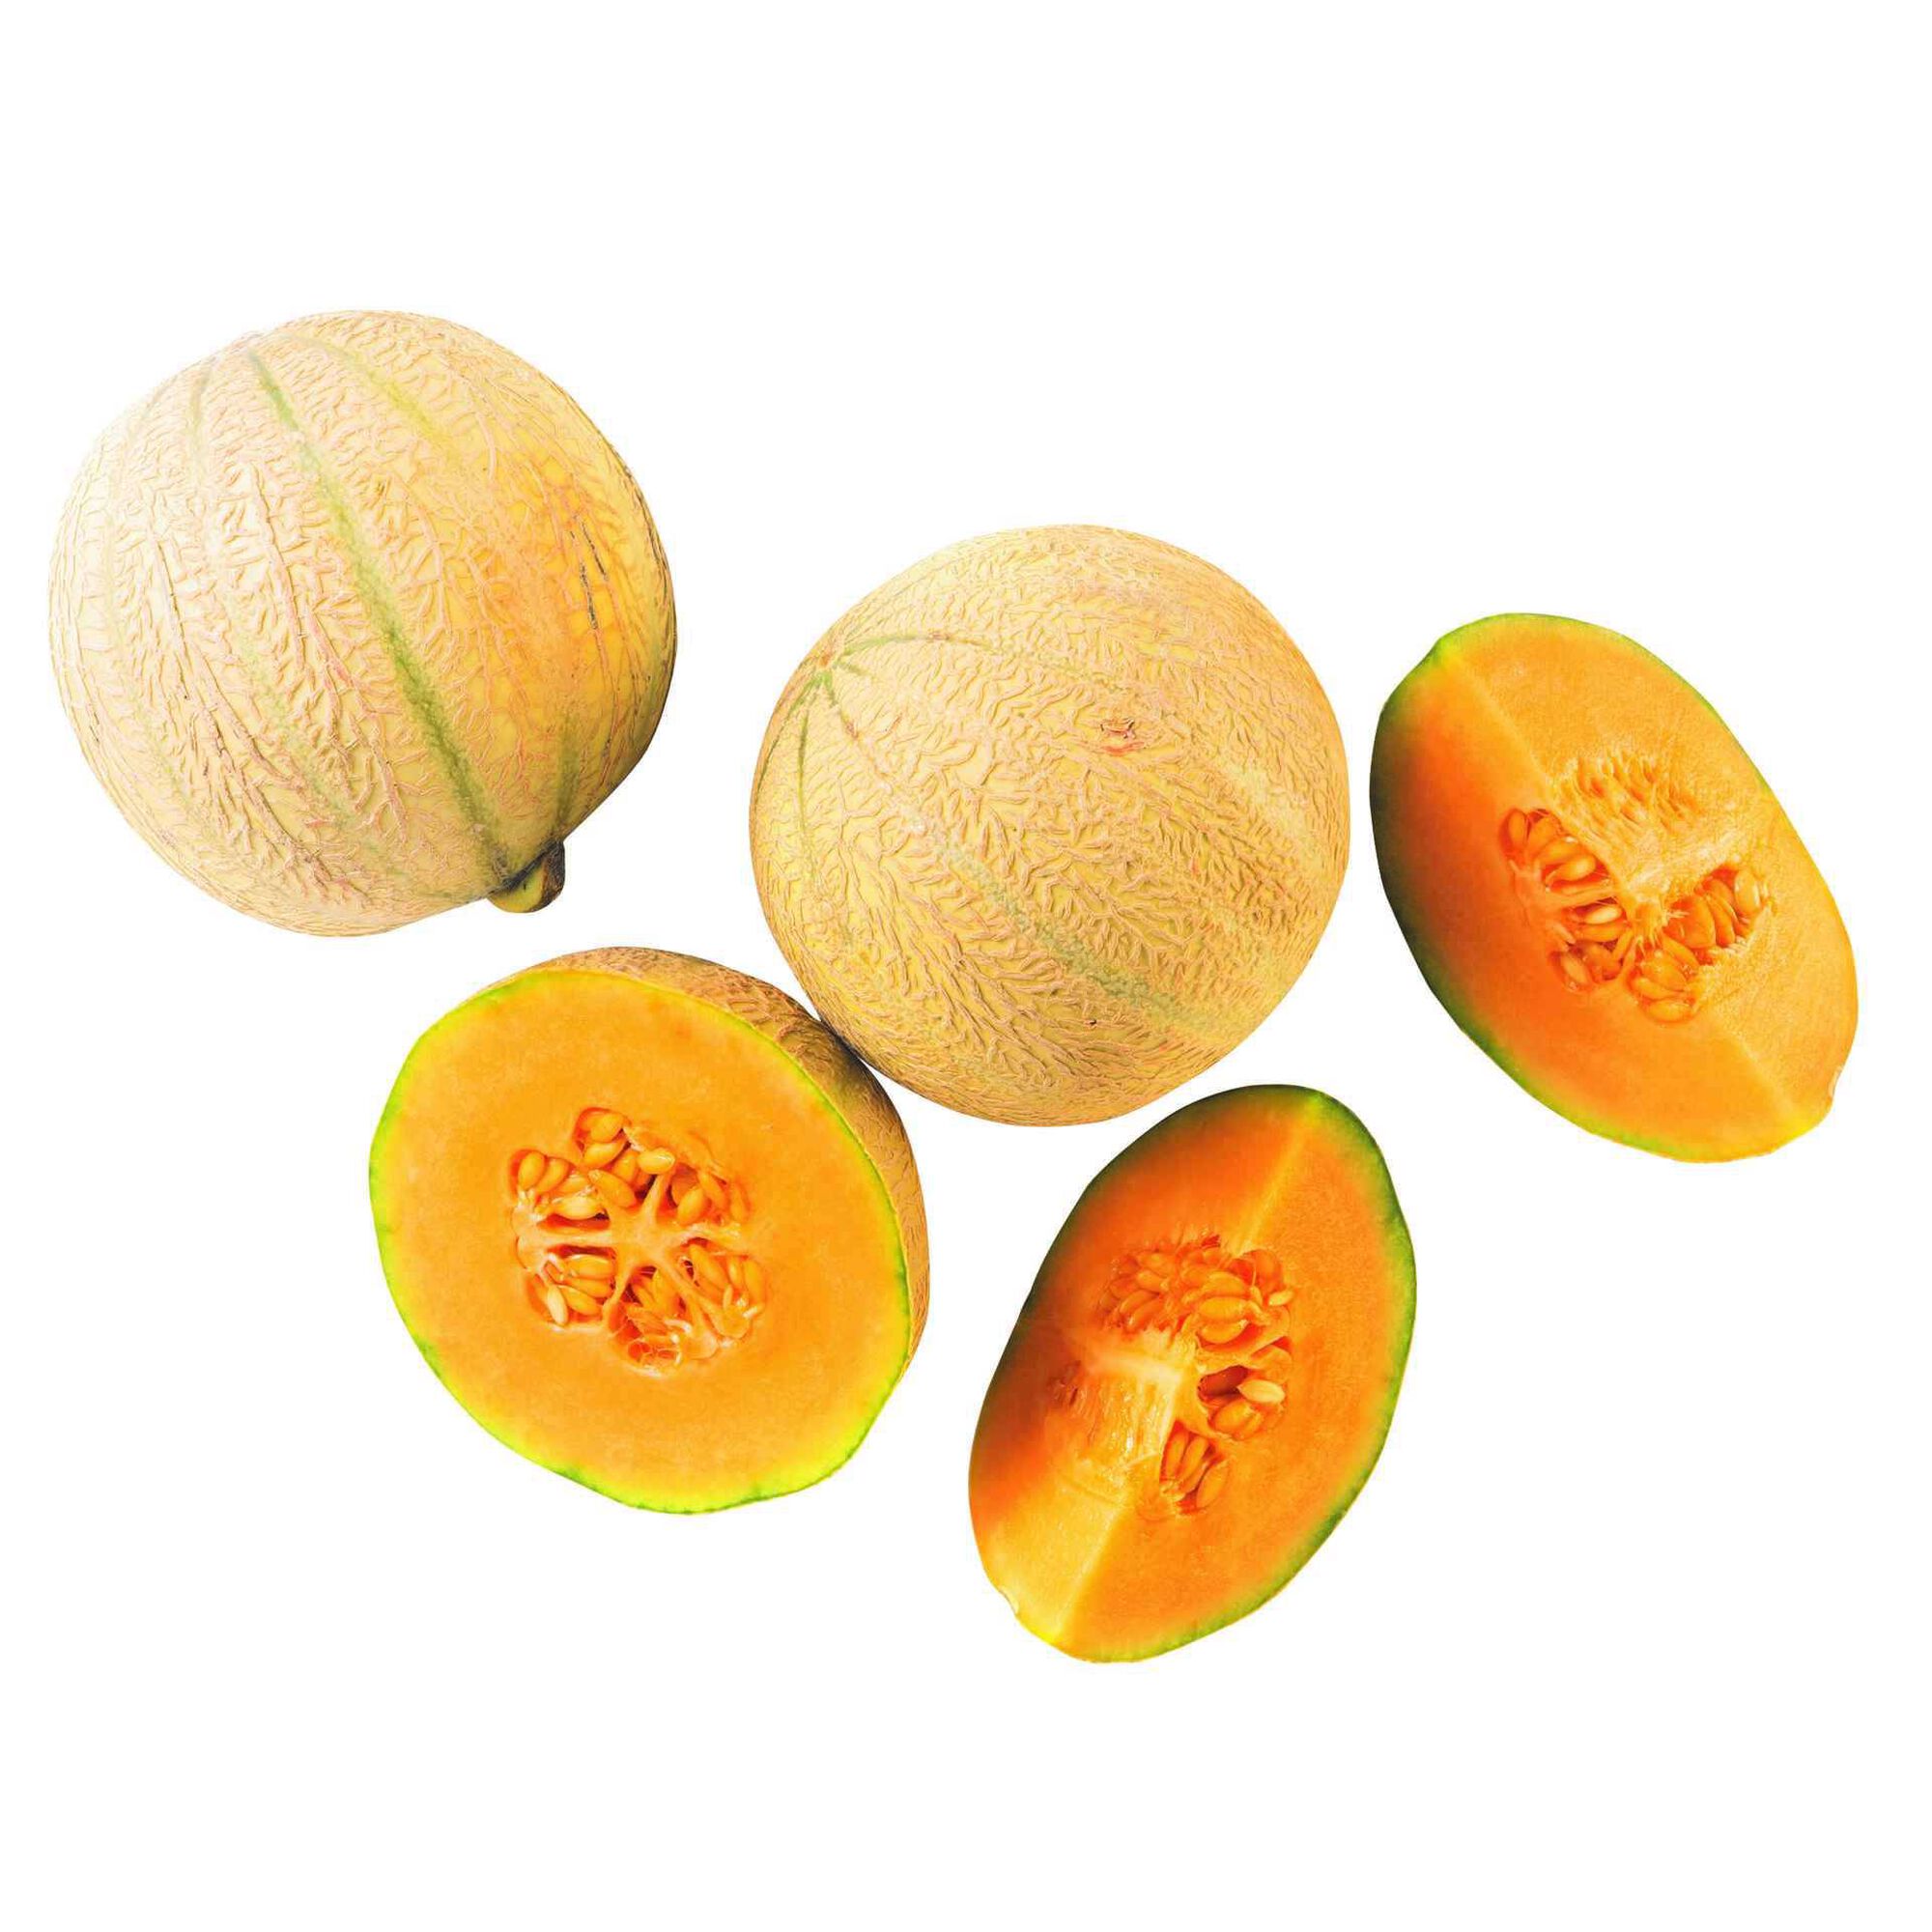 Meloa Cantalupe/Charentais Inteira